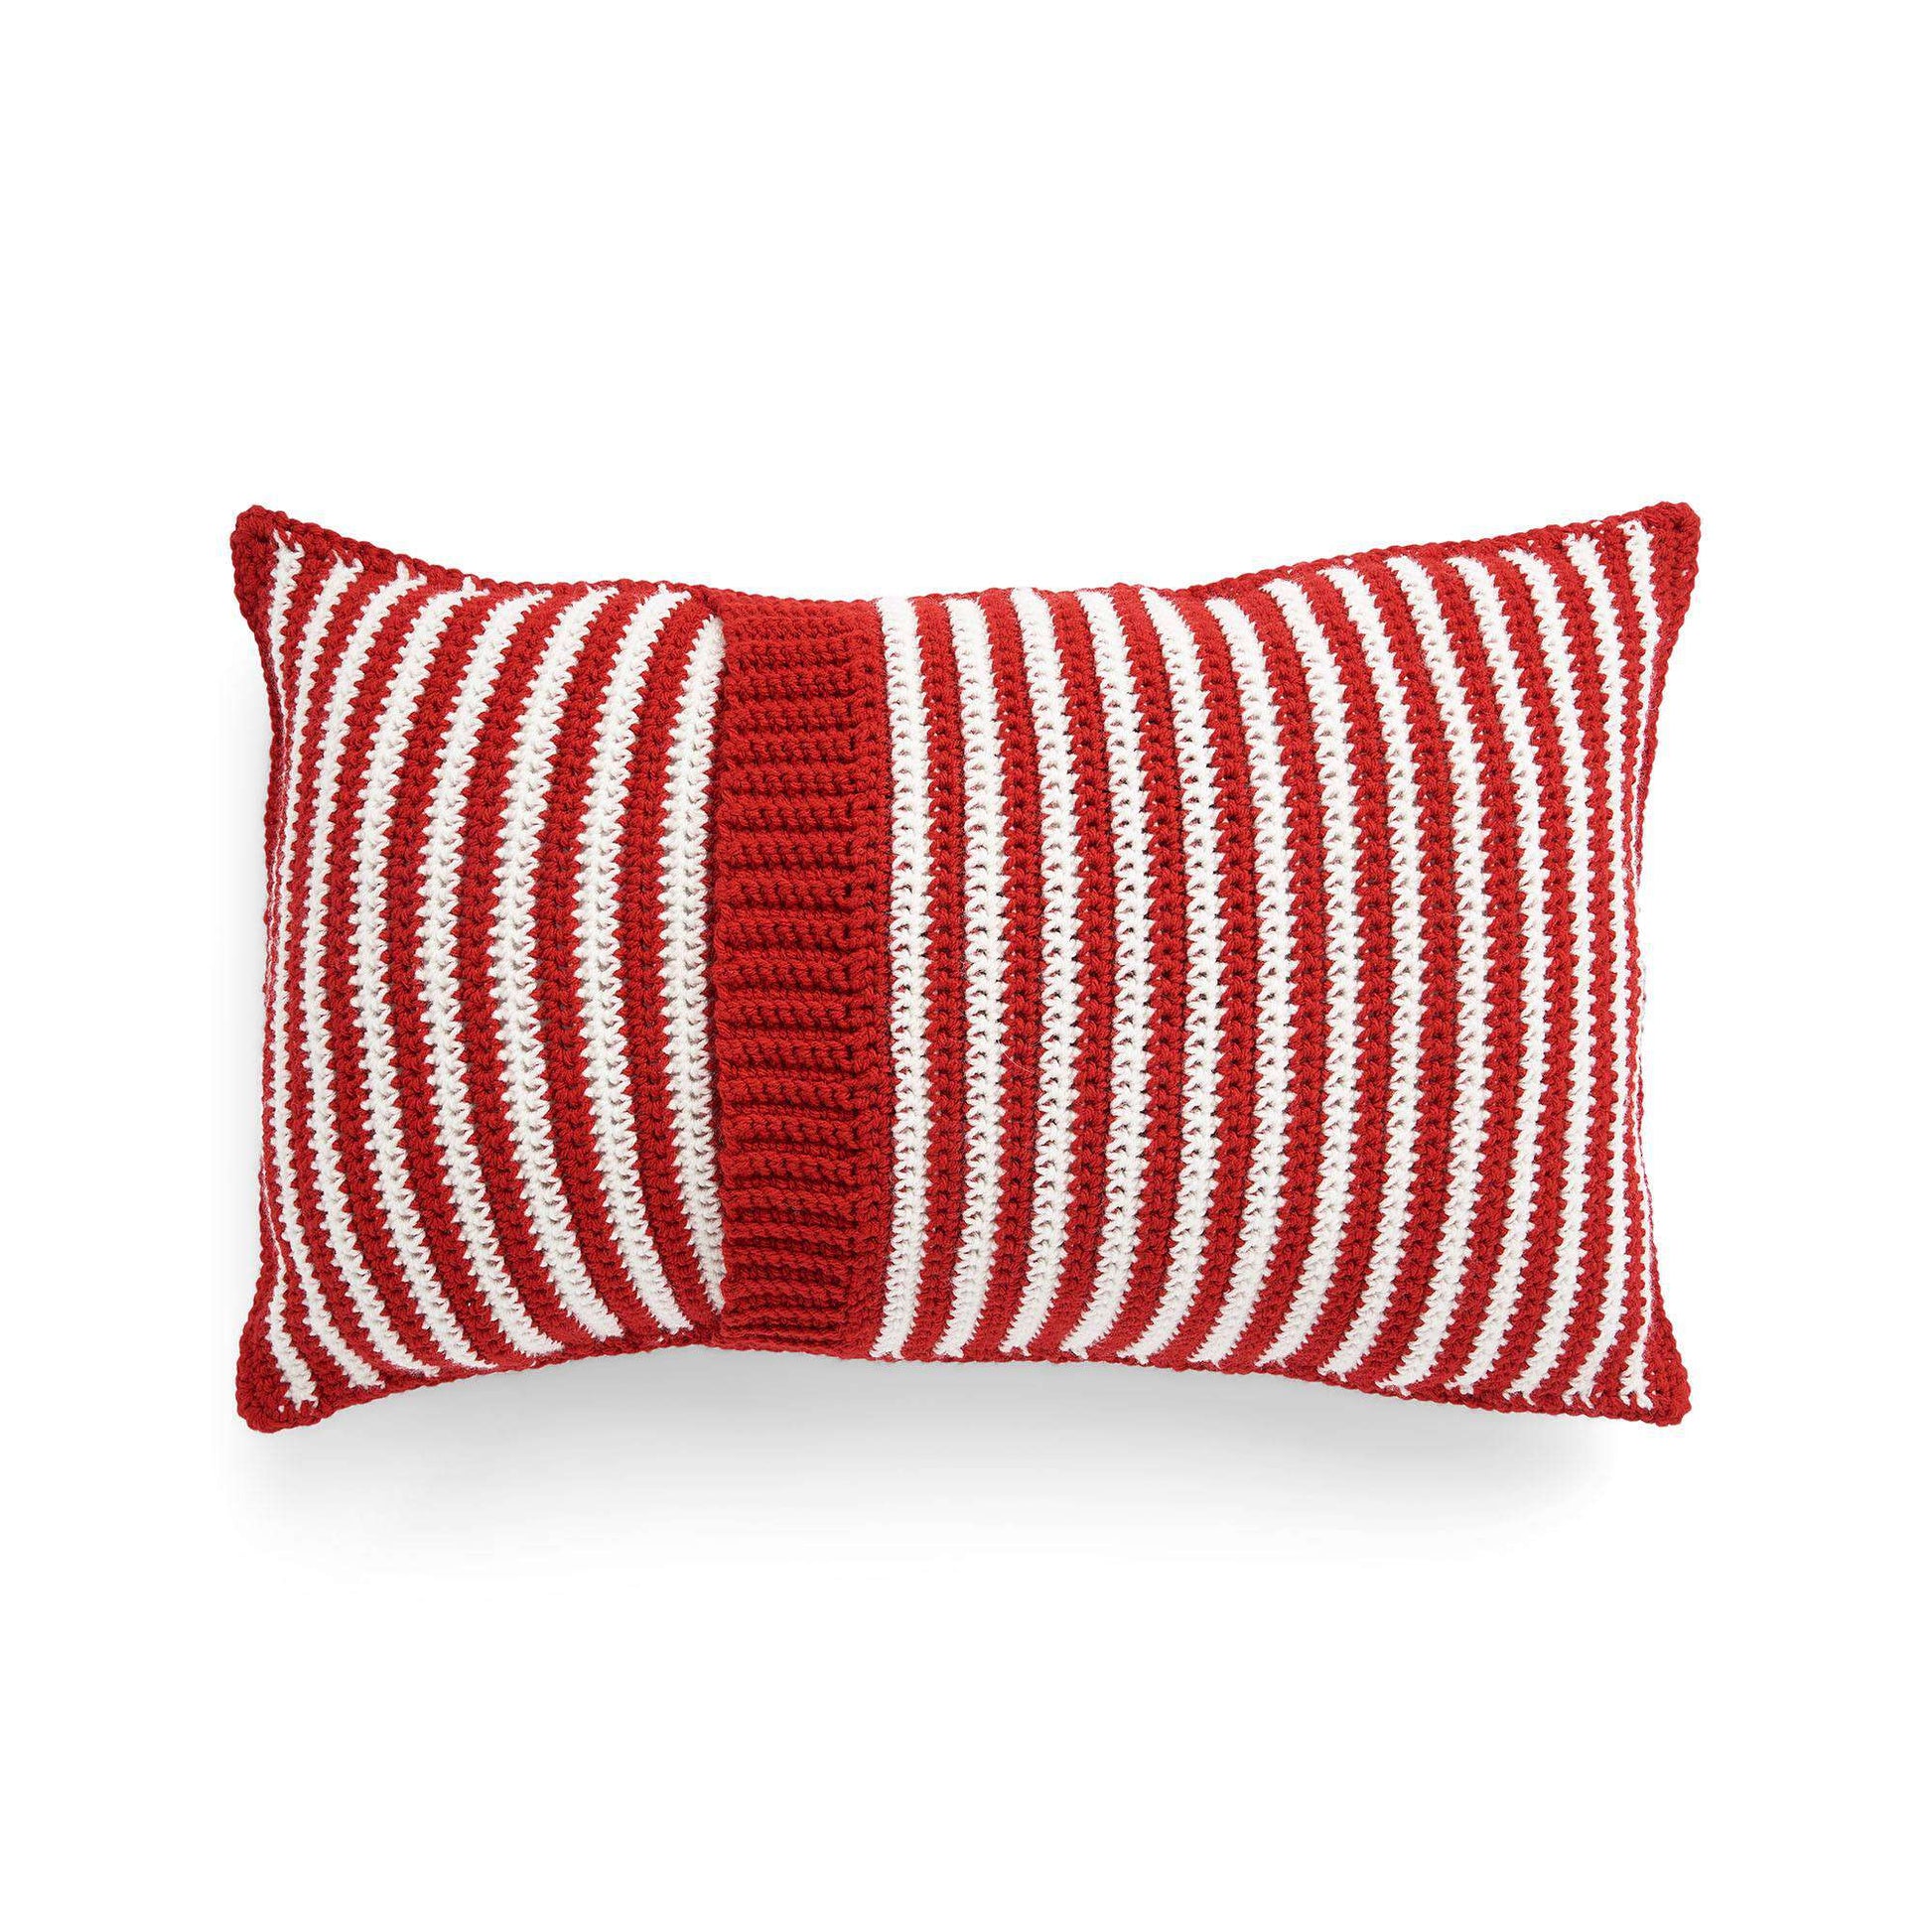 Free Red Heart Stripes & Snowflakes Mosaic Crochet Pillow Pattern